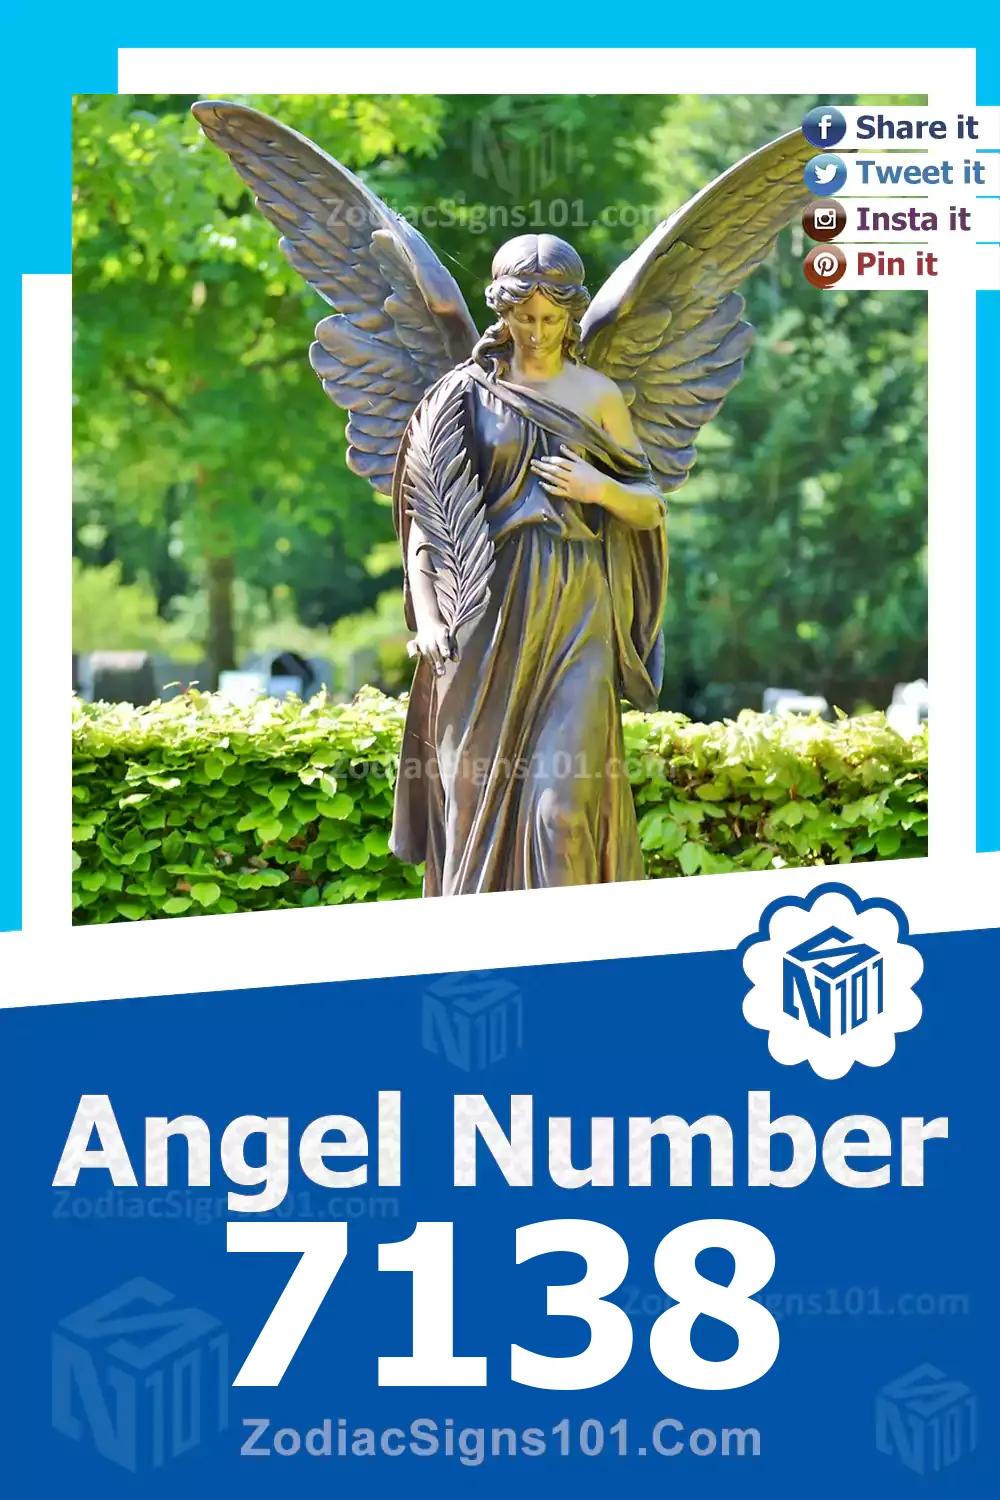 7138-Angel-Number-Meaning.jpg